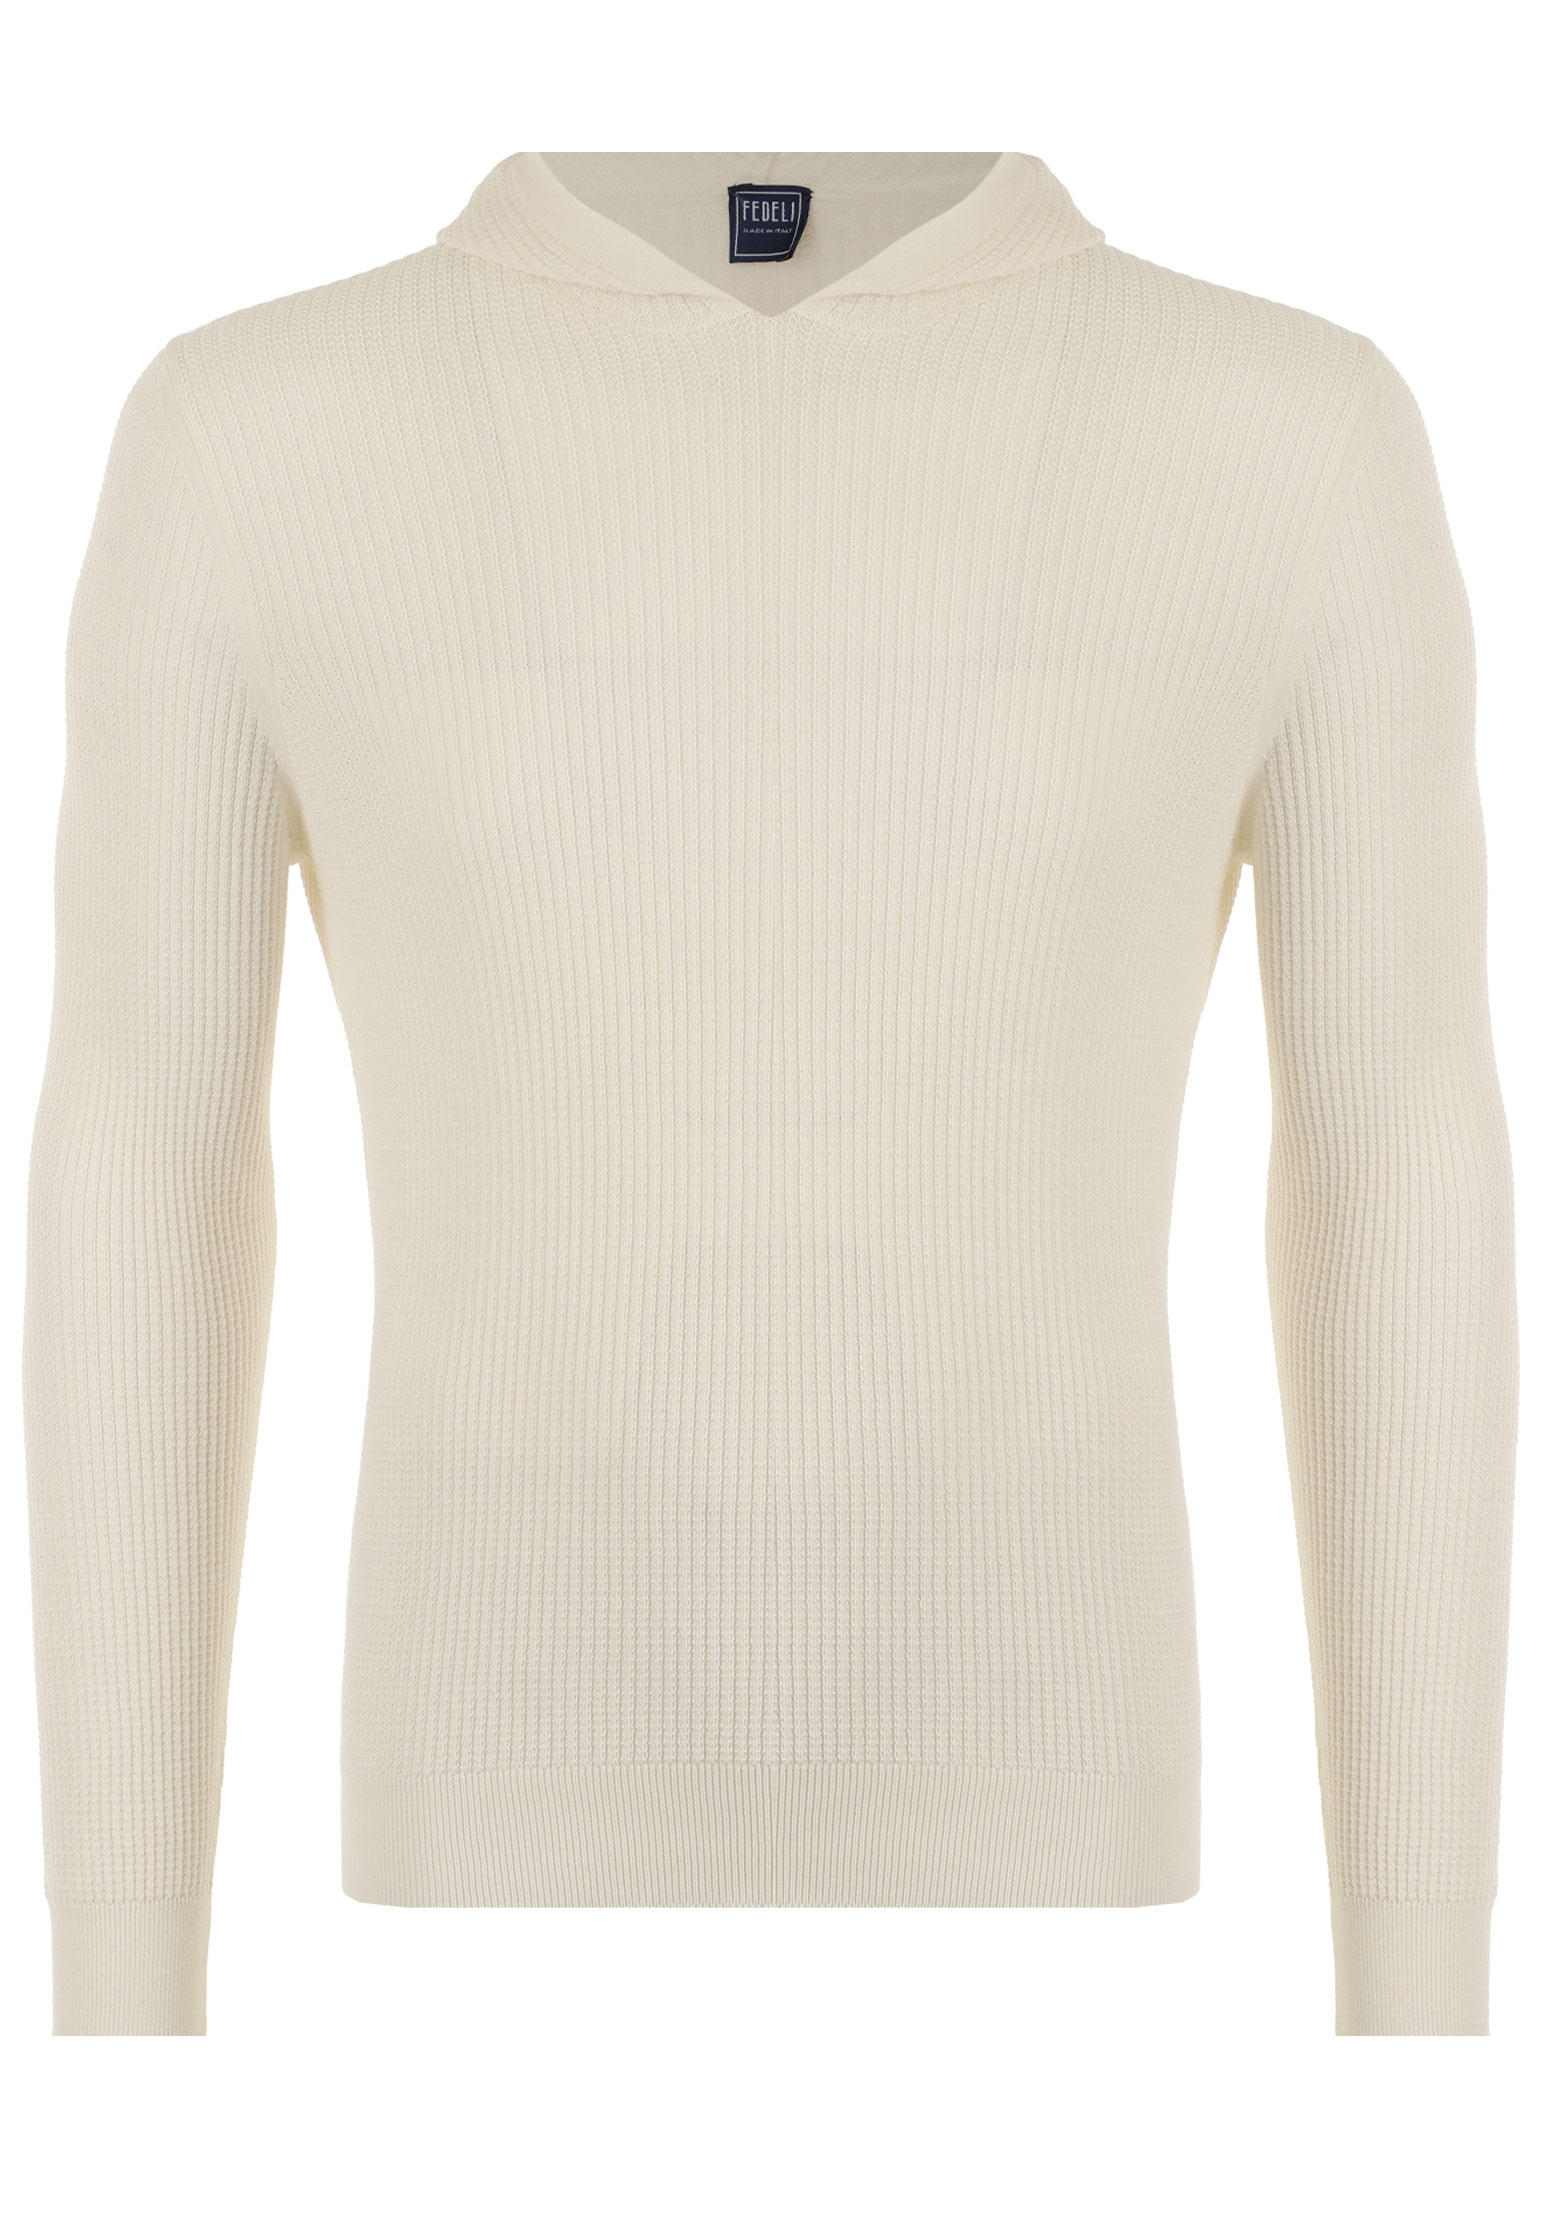 мужской свитер fedeli, белый